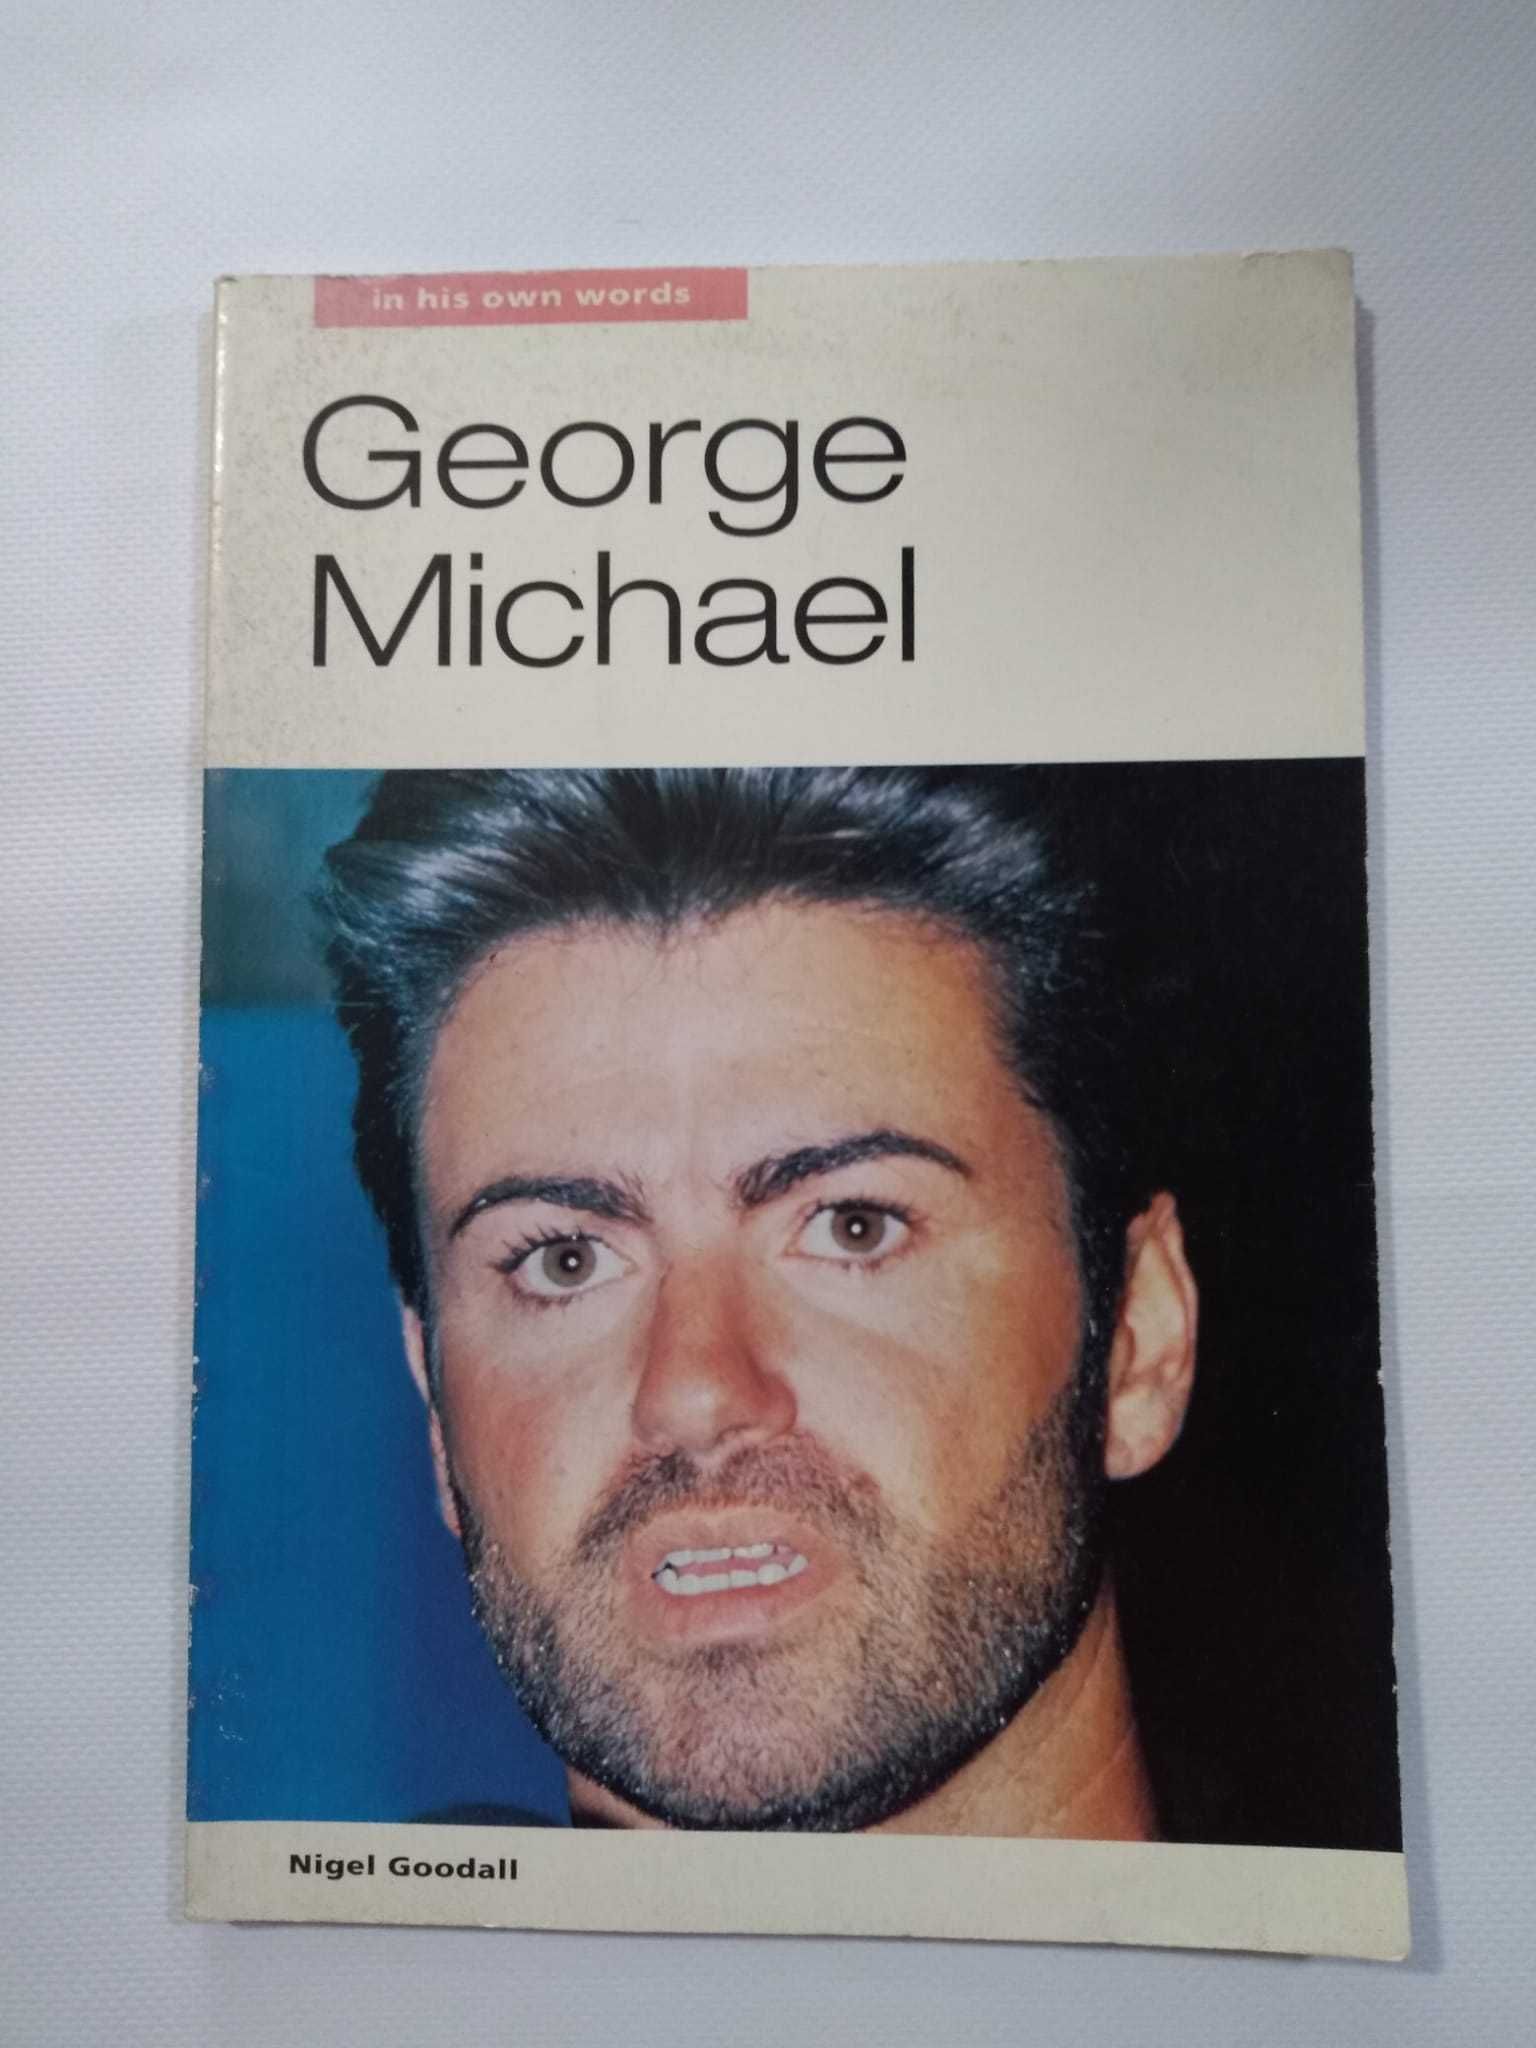 George Michael: In His Own Words
by Nigel Goodall